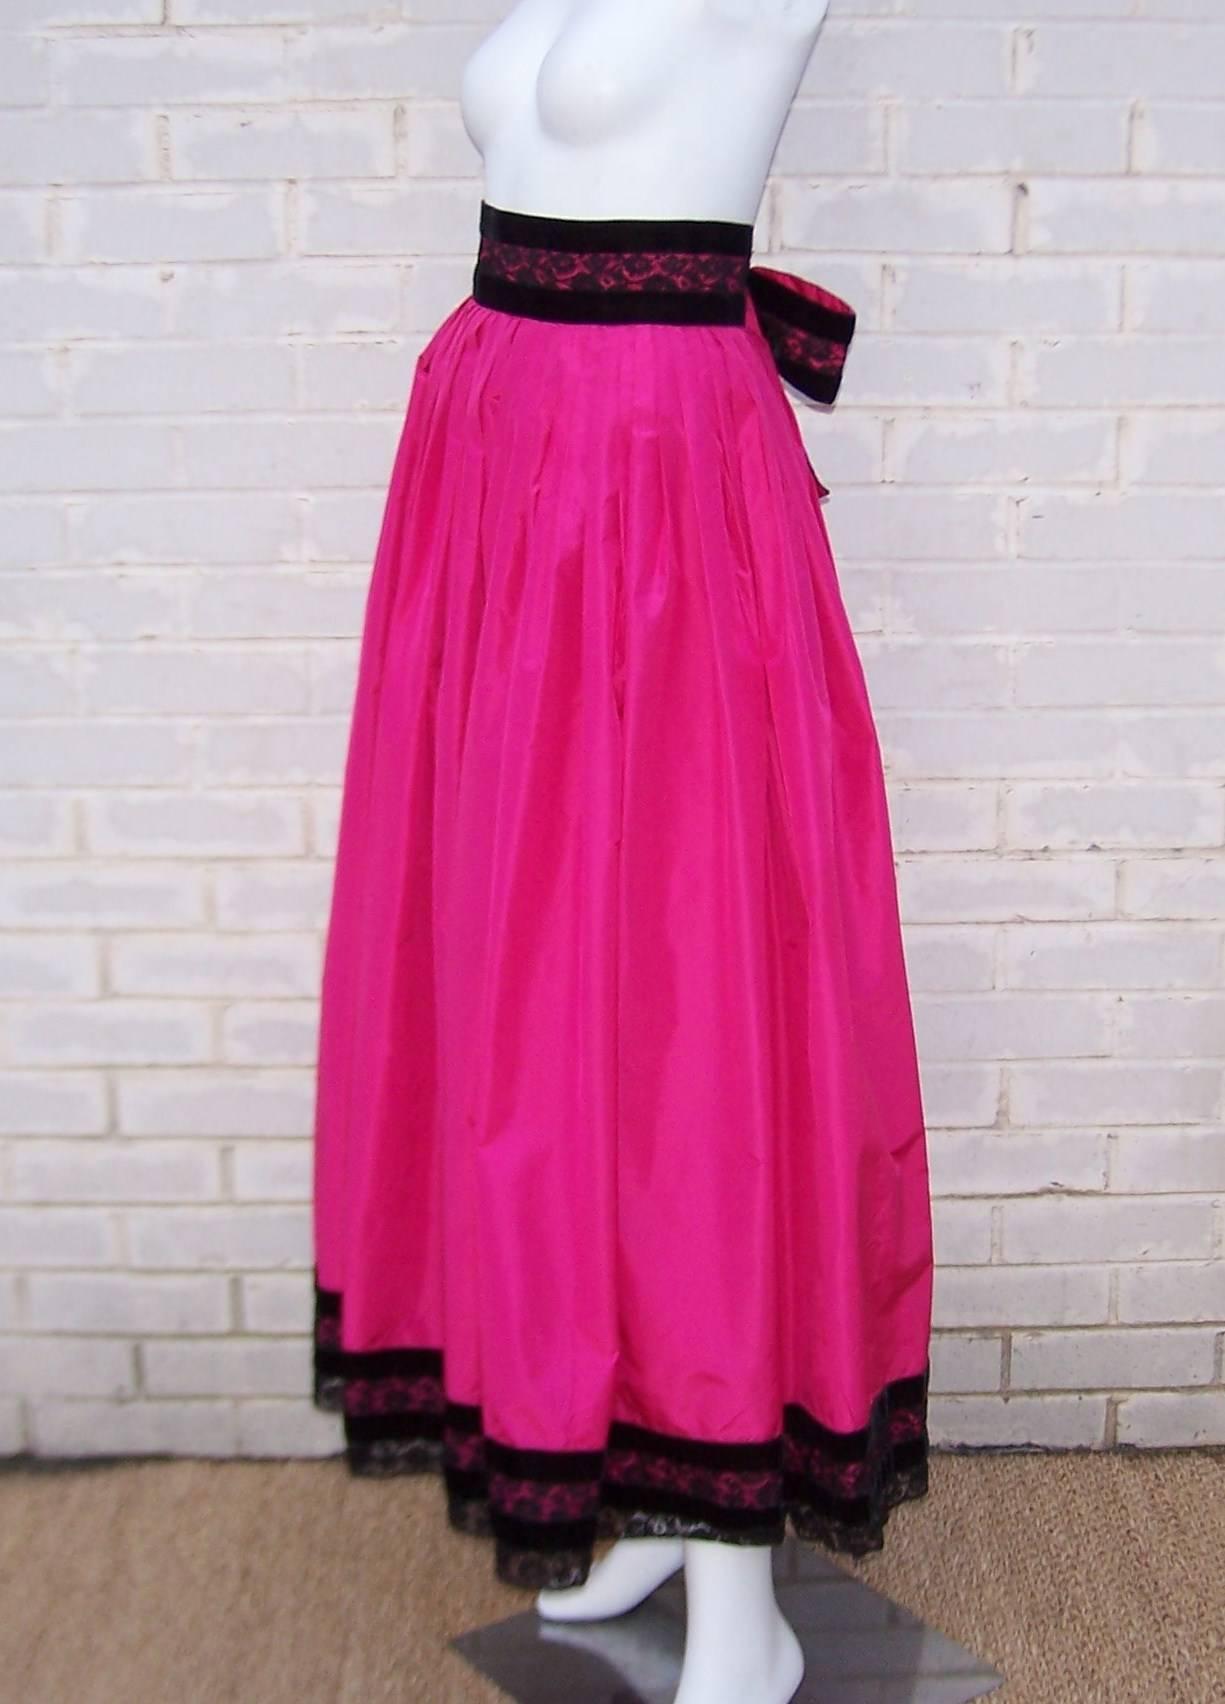 Pink Oscar de la Renta Fuchsia Silk Taffeta Skirt With Velvet Details, 1980's